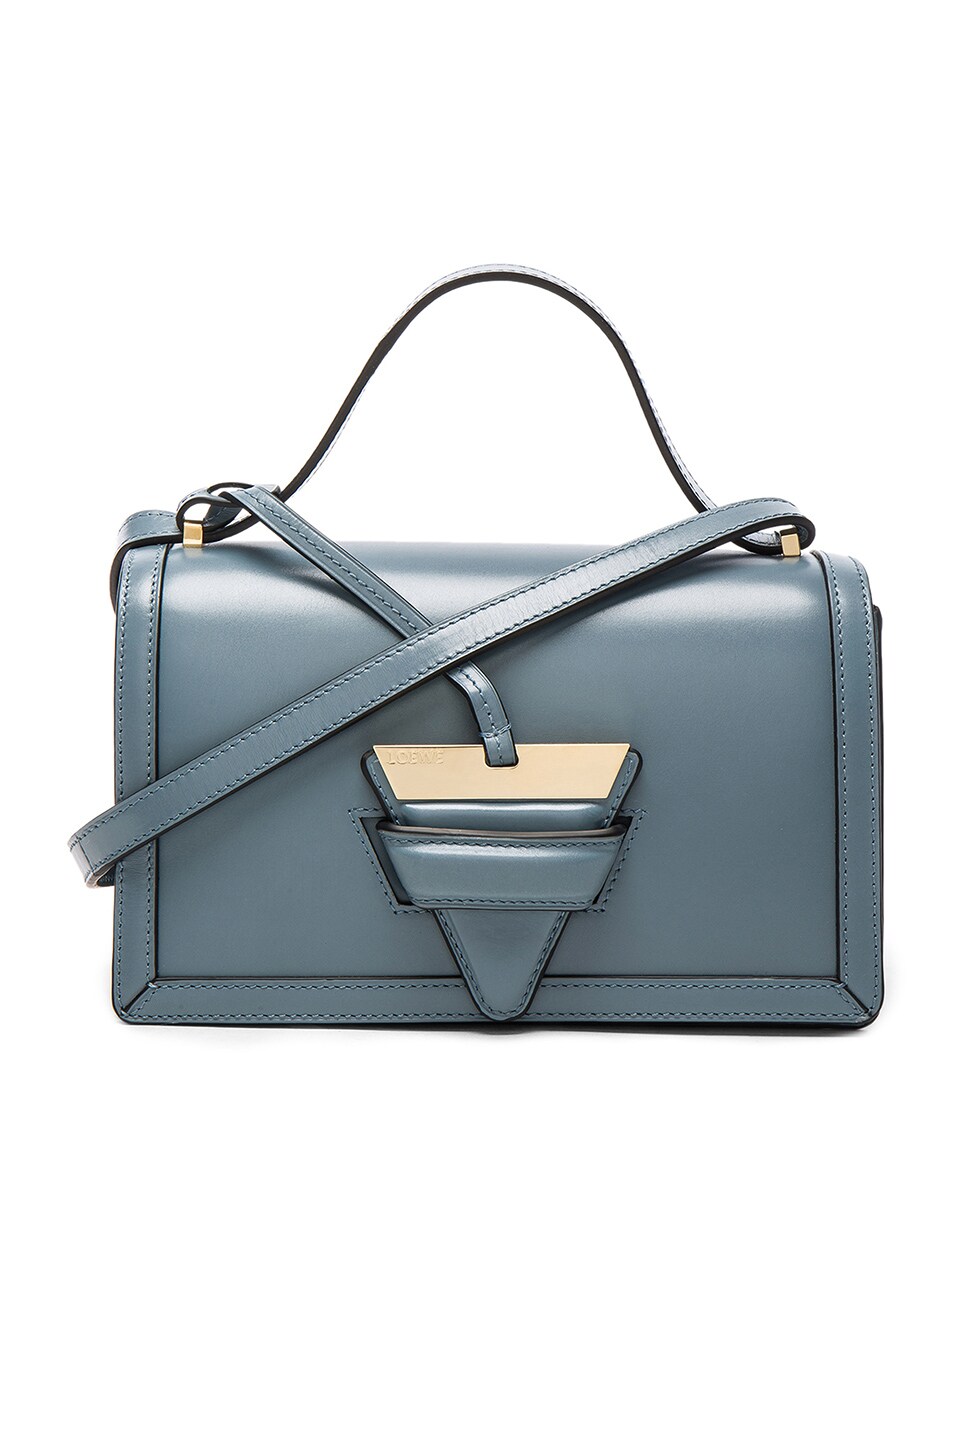 Loewe Barcelona Shoulder Bag in Stone Blue | FWRD